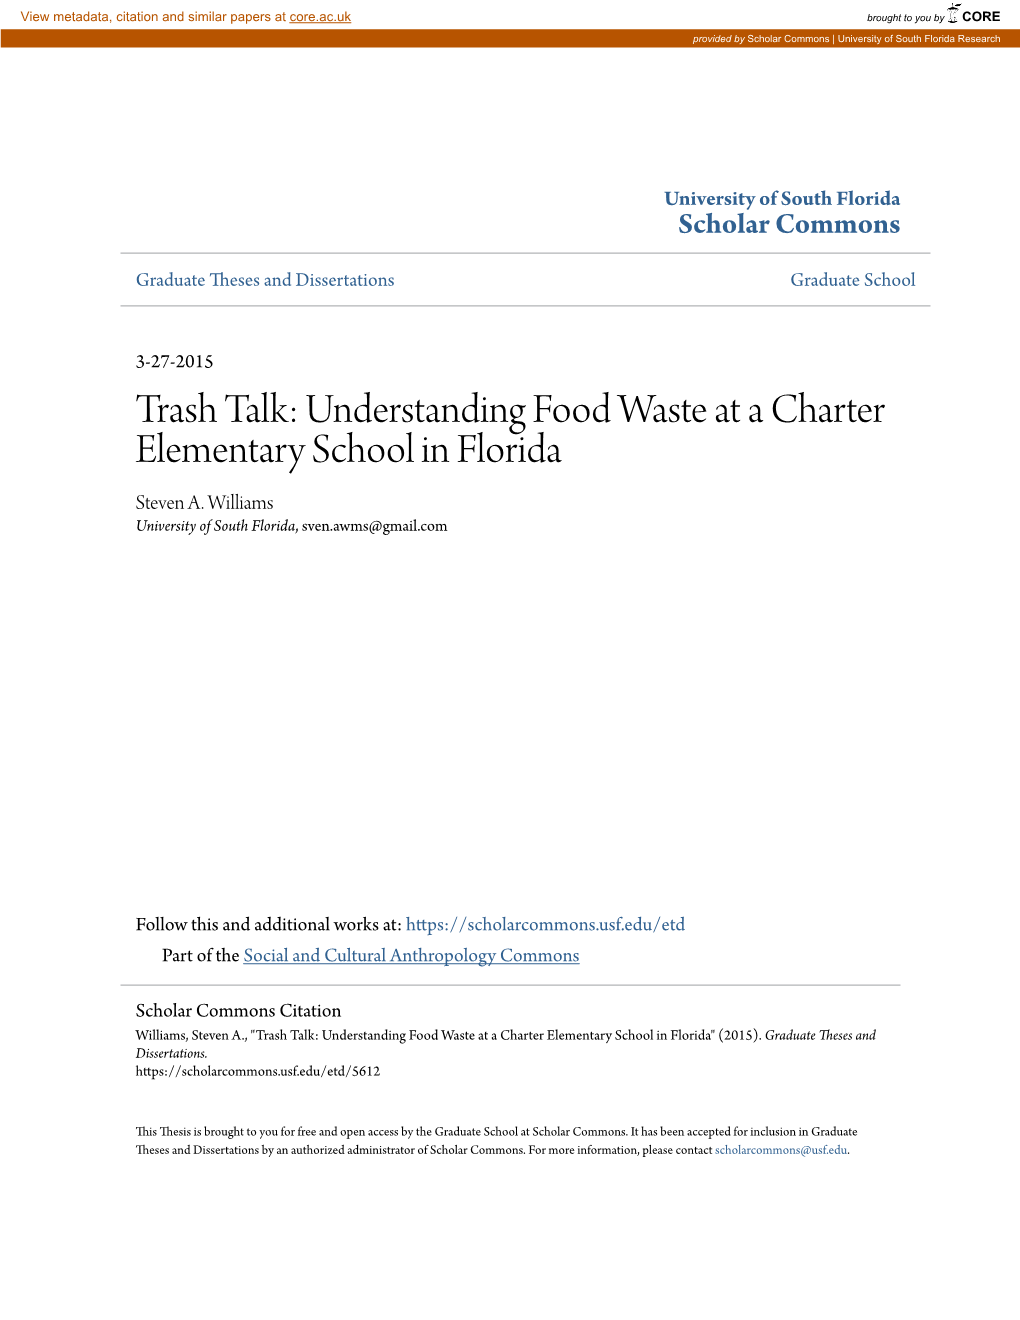 Trash Talk: Understanding Food Waste at a Charter Elementary School in Florida Steven A